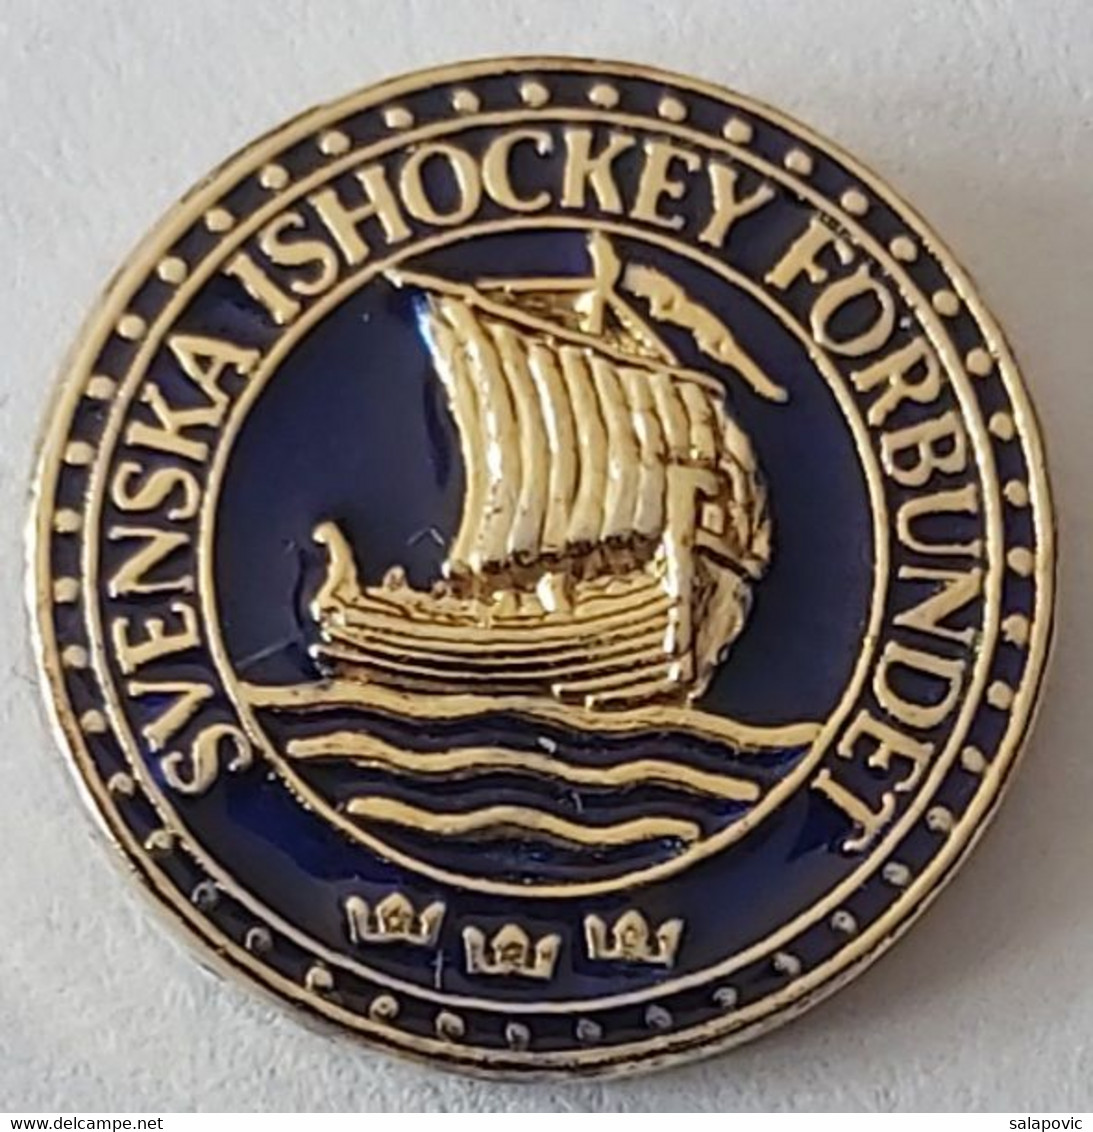 Sweden Ice Hockey Association Federation (Svenska Ishockeyförbundet) PINS A10/1 - Sports D'hiver